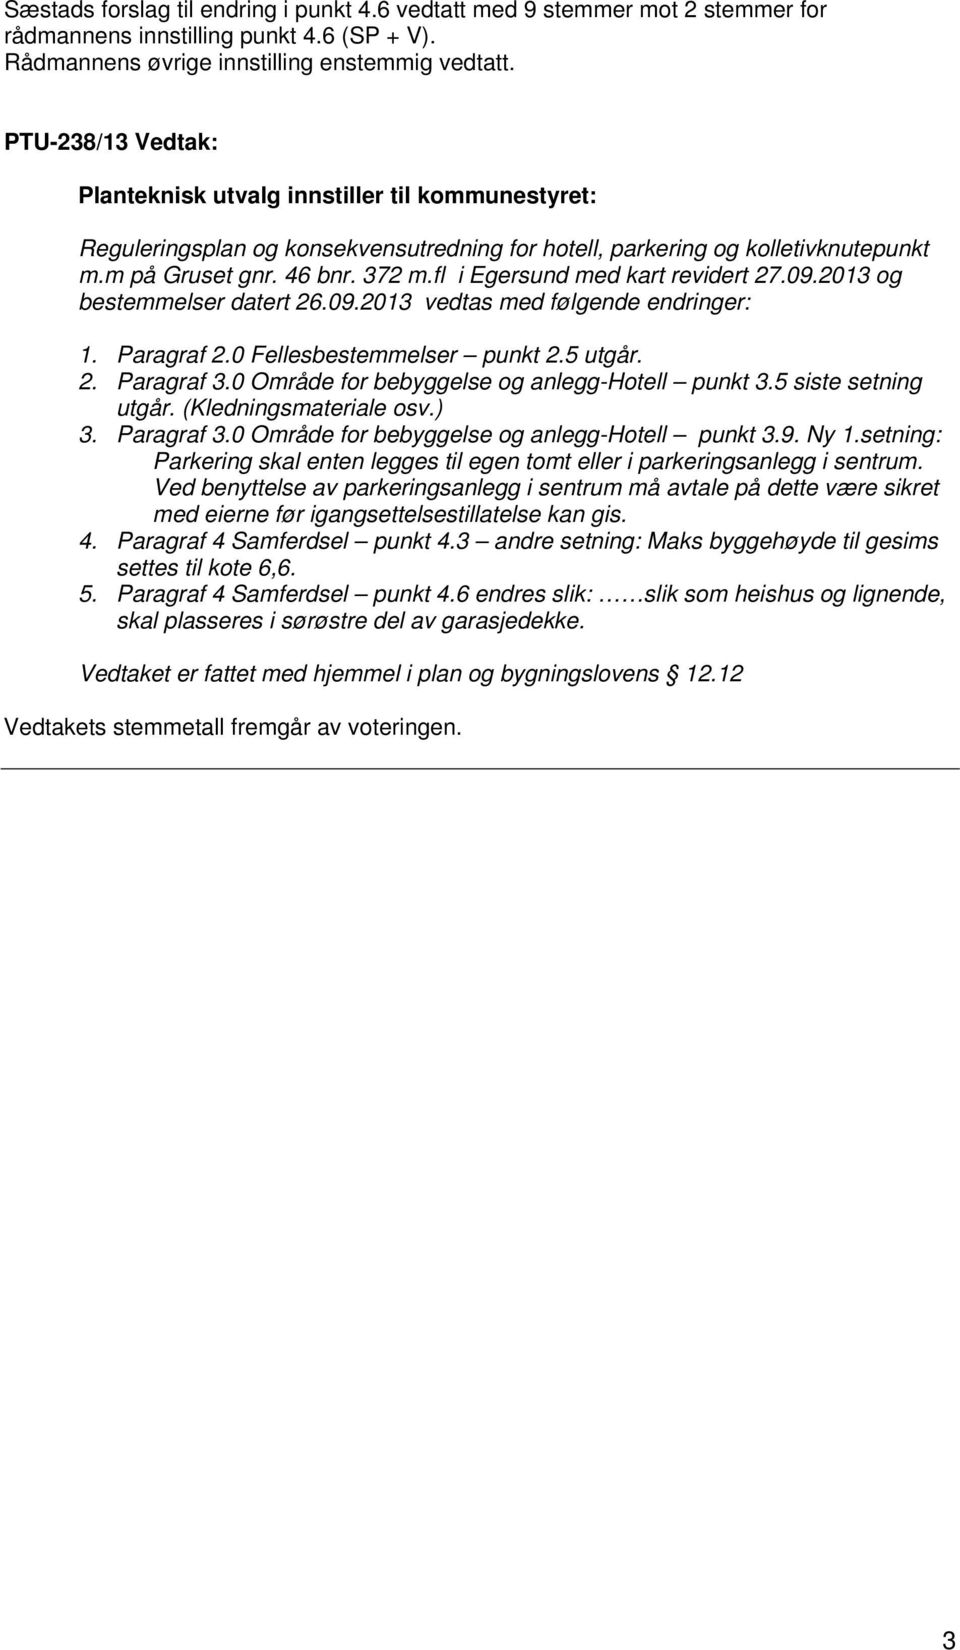 fl i Egersund med kart revidert 27.09.2013 og bestemmelser datert 26.09.2013 vedtas med følgende endringer: 1. Paragraf 2.0 Fellesbestemmelser punkt 2.5 utgår. 2. Paragraf 3.